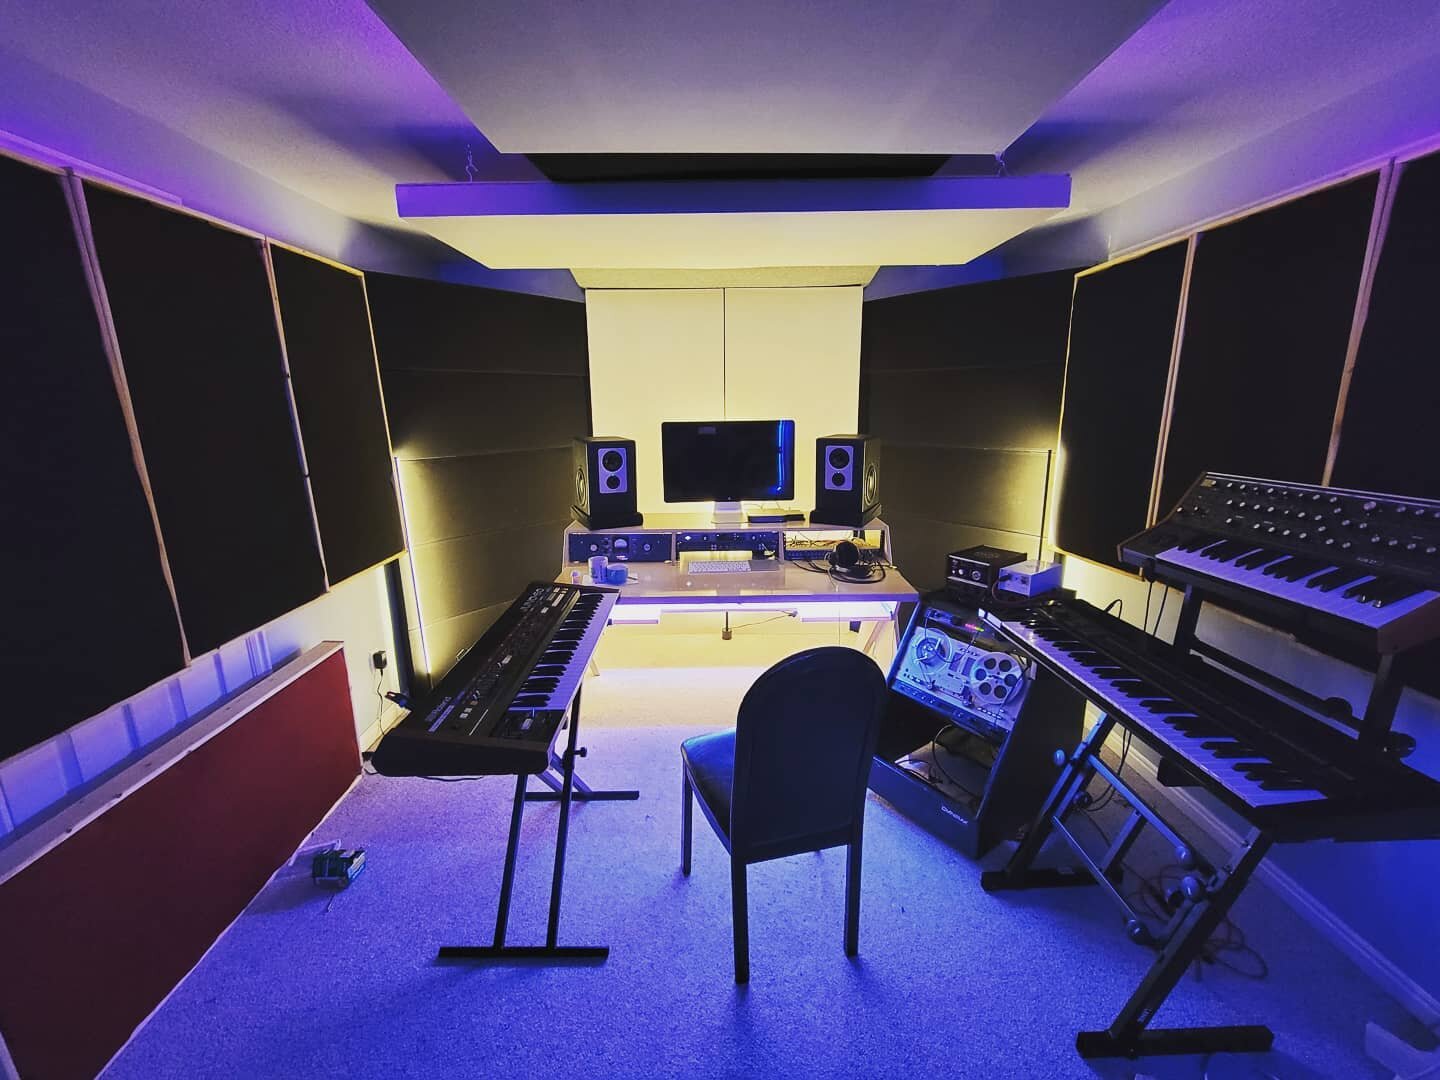 New mastering studio. Come get one fresh master on the house. 

#producerlife #producergodz #beats #beatsforsale #sampling #samplingbeats #producer #producergods #music #musicproducers #musicproducer #makingbeats #newmusic #hiphop #drums #utahmusic #